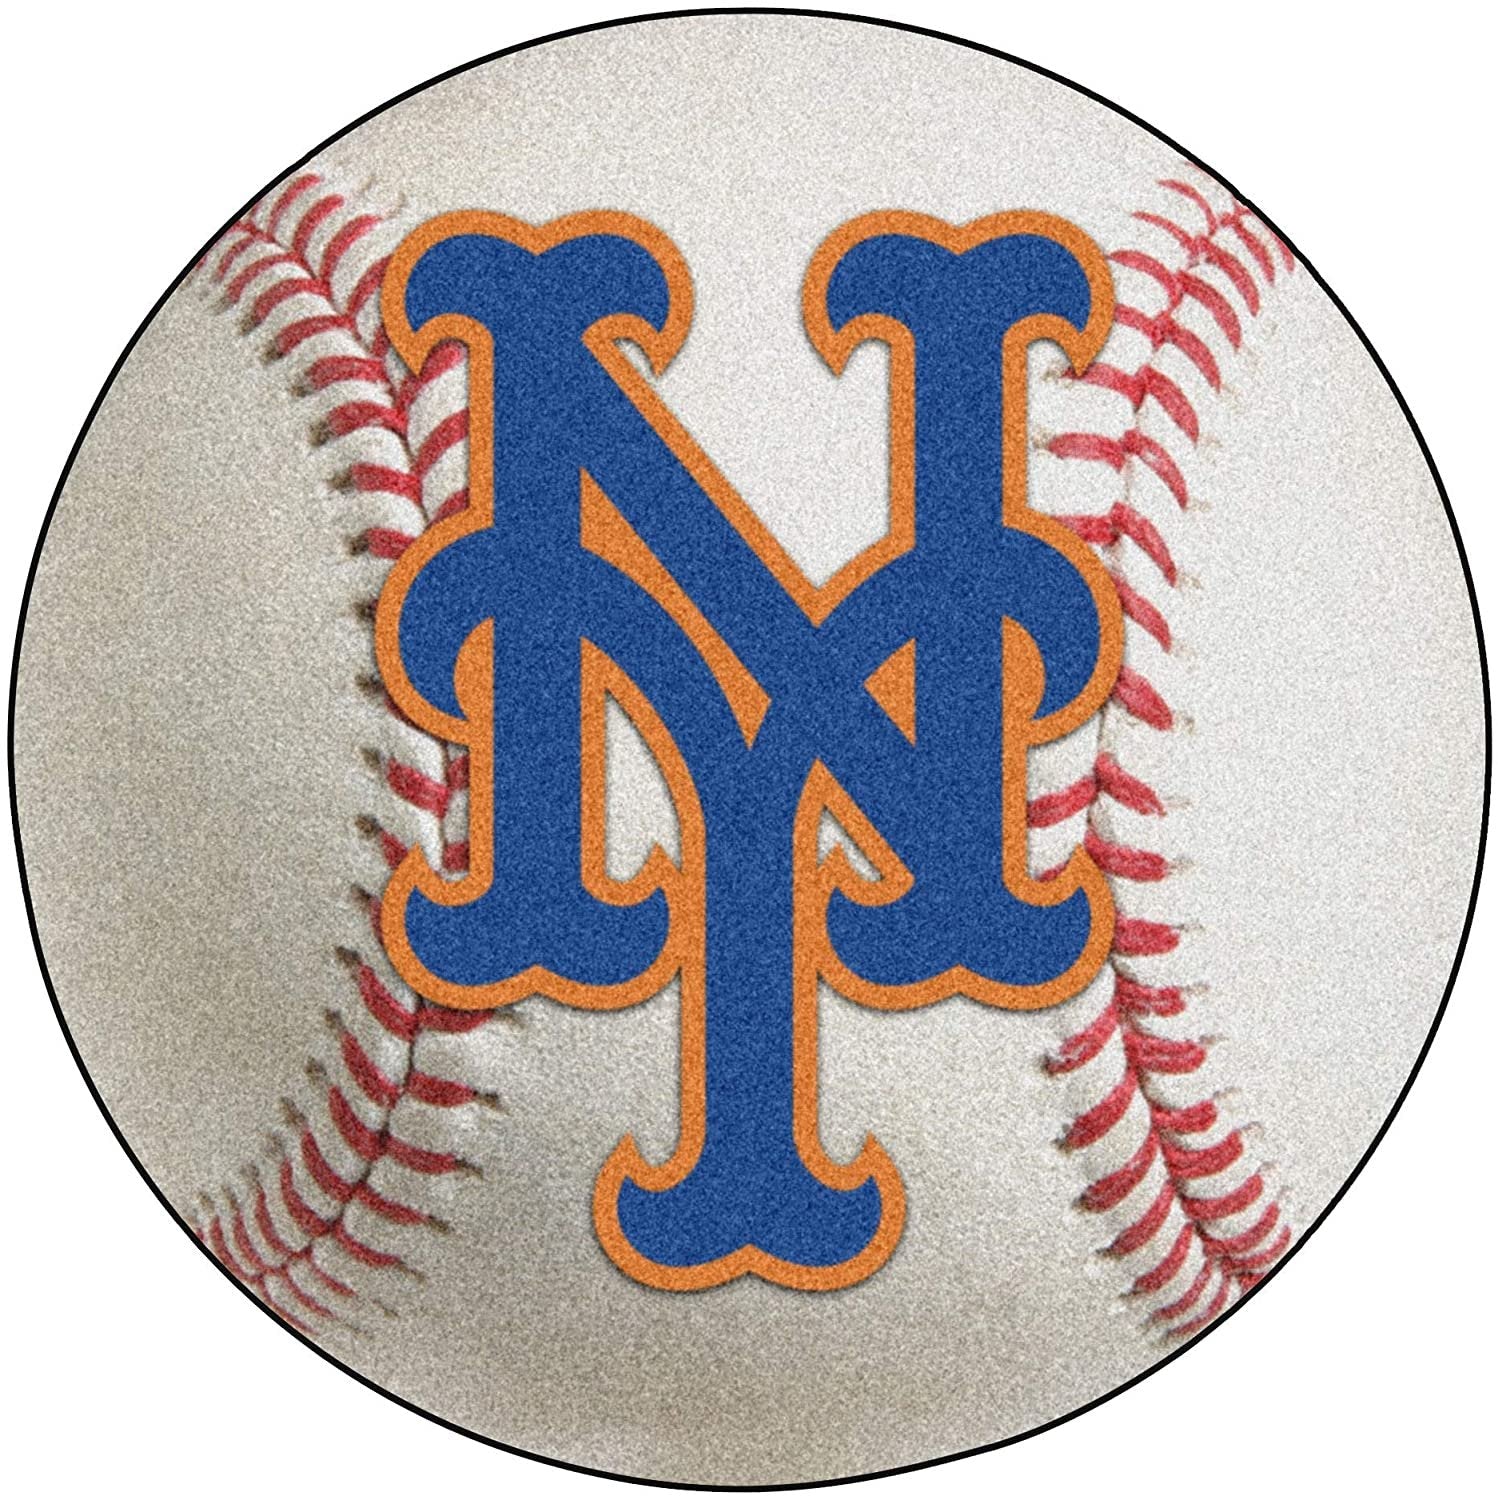 New York Mets 27 Inch Area Rug Floor Mat, Nylon, Anti-Skid Backing, Baseball Shaped